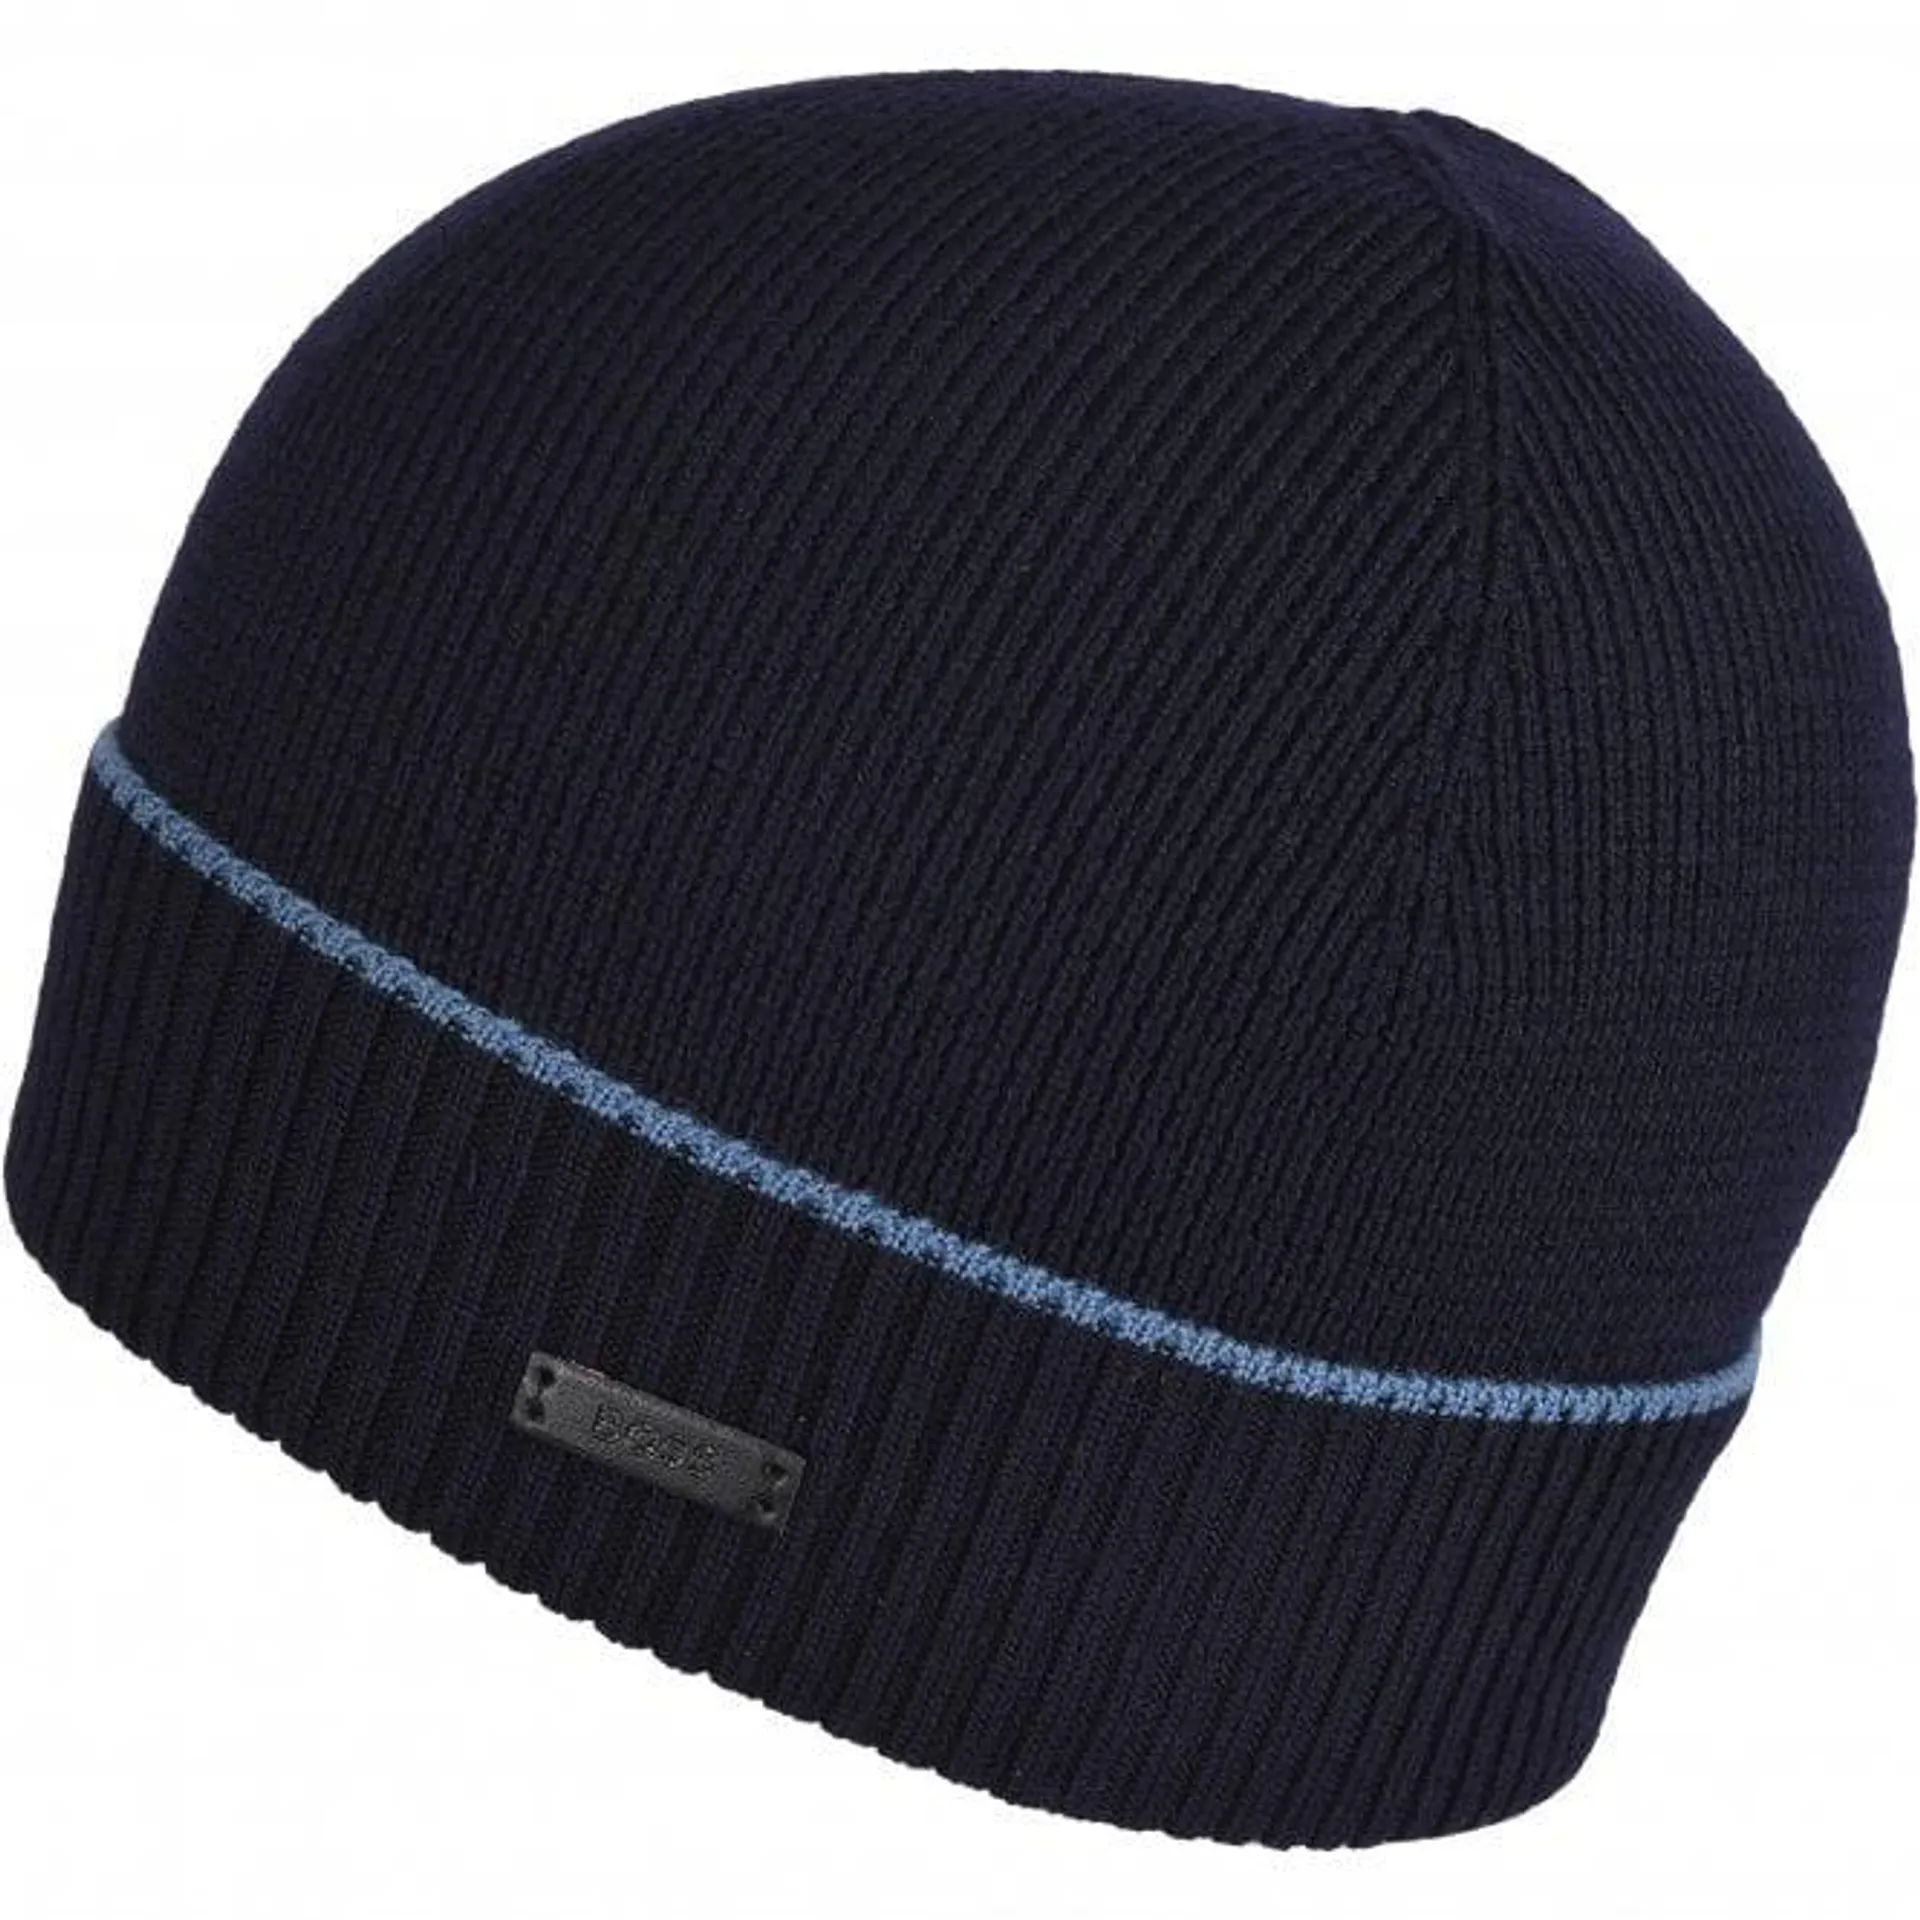 Litalo Virgin Wool Beanie Hat & Scarf Gift Set, Navy/blue